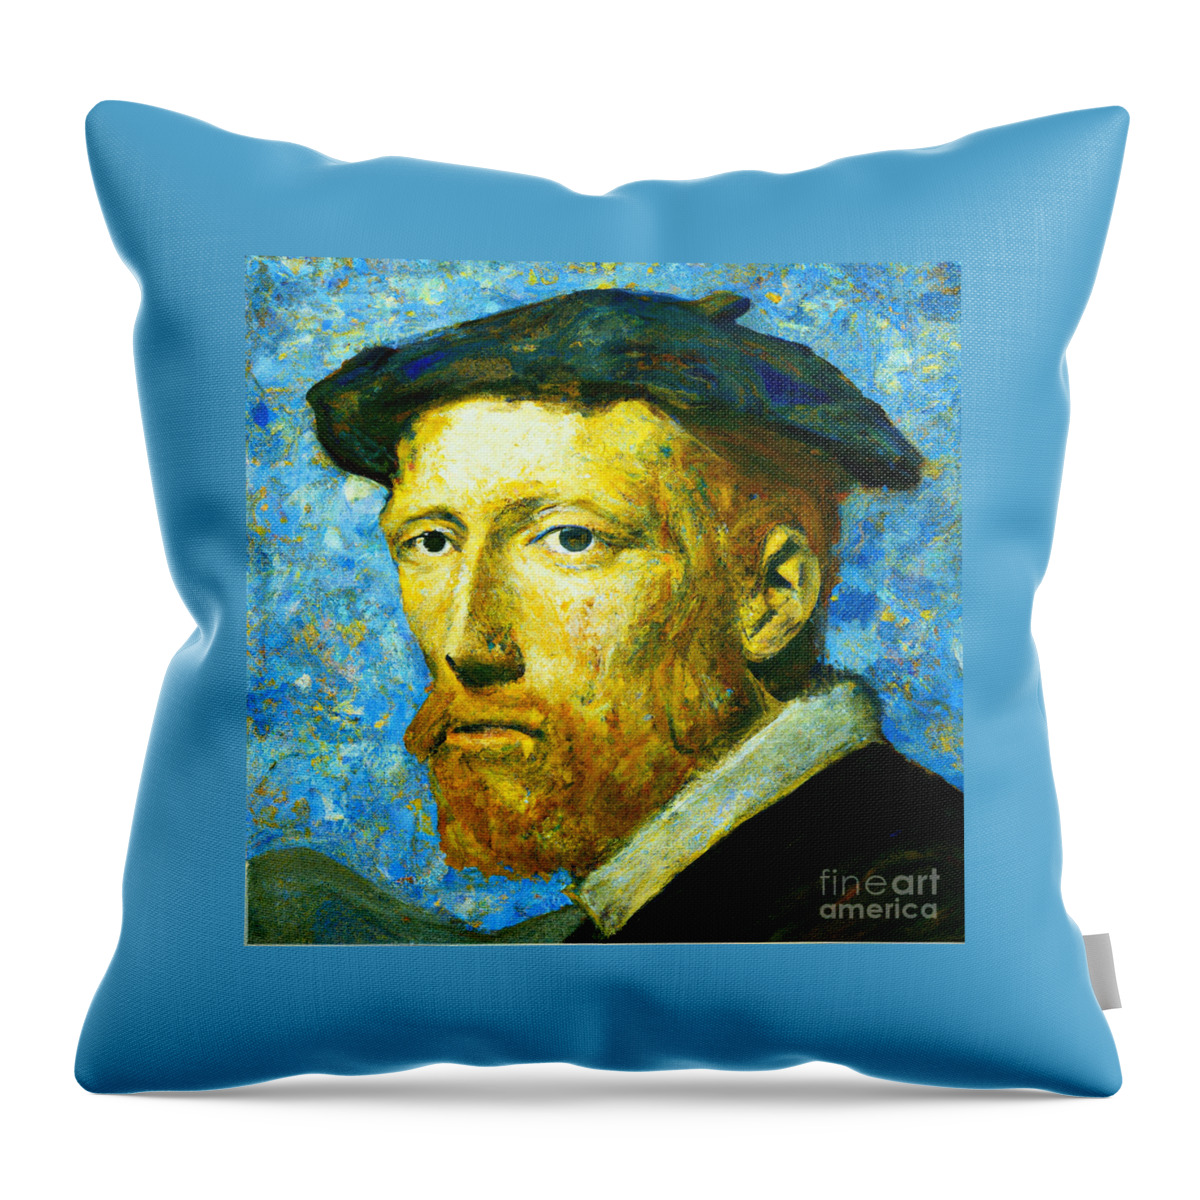  Throw Pillow featuring the mixed media Van Gogh by Bencasso Barnesquiat